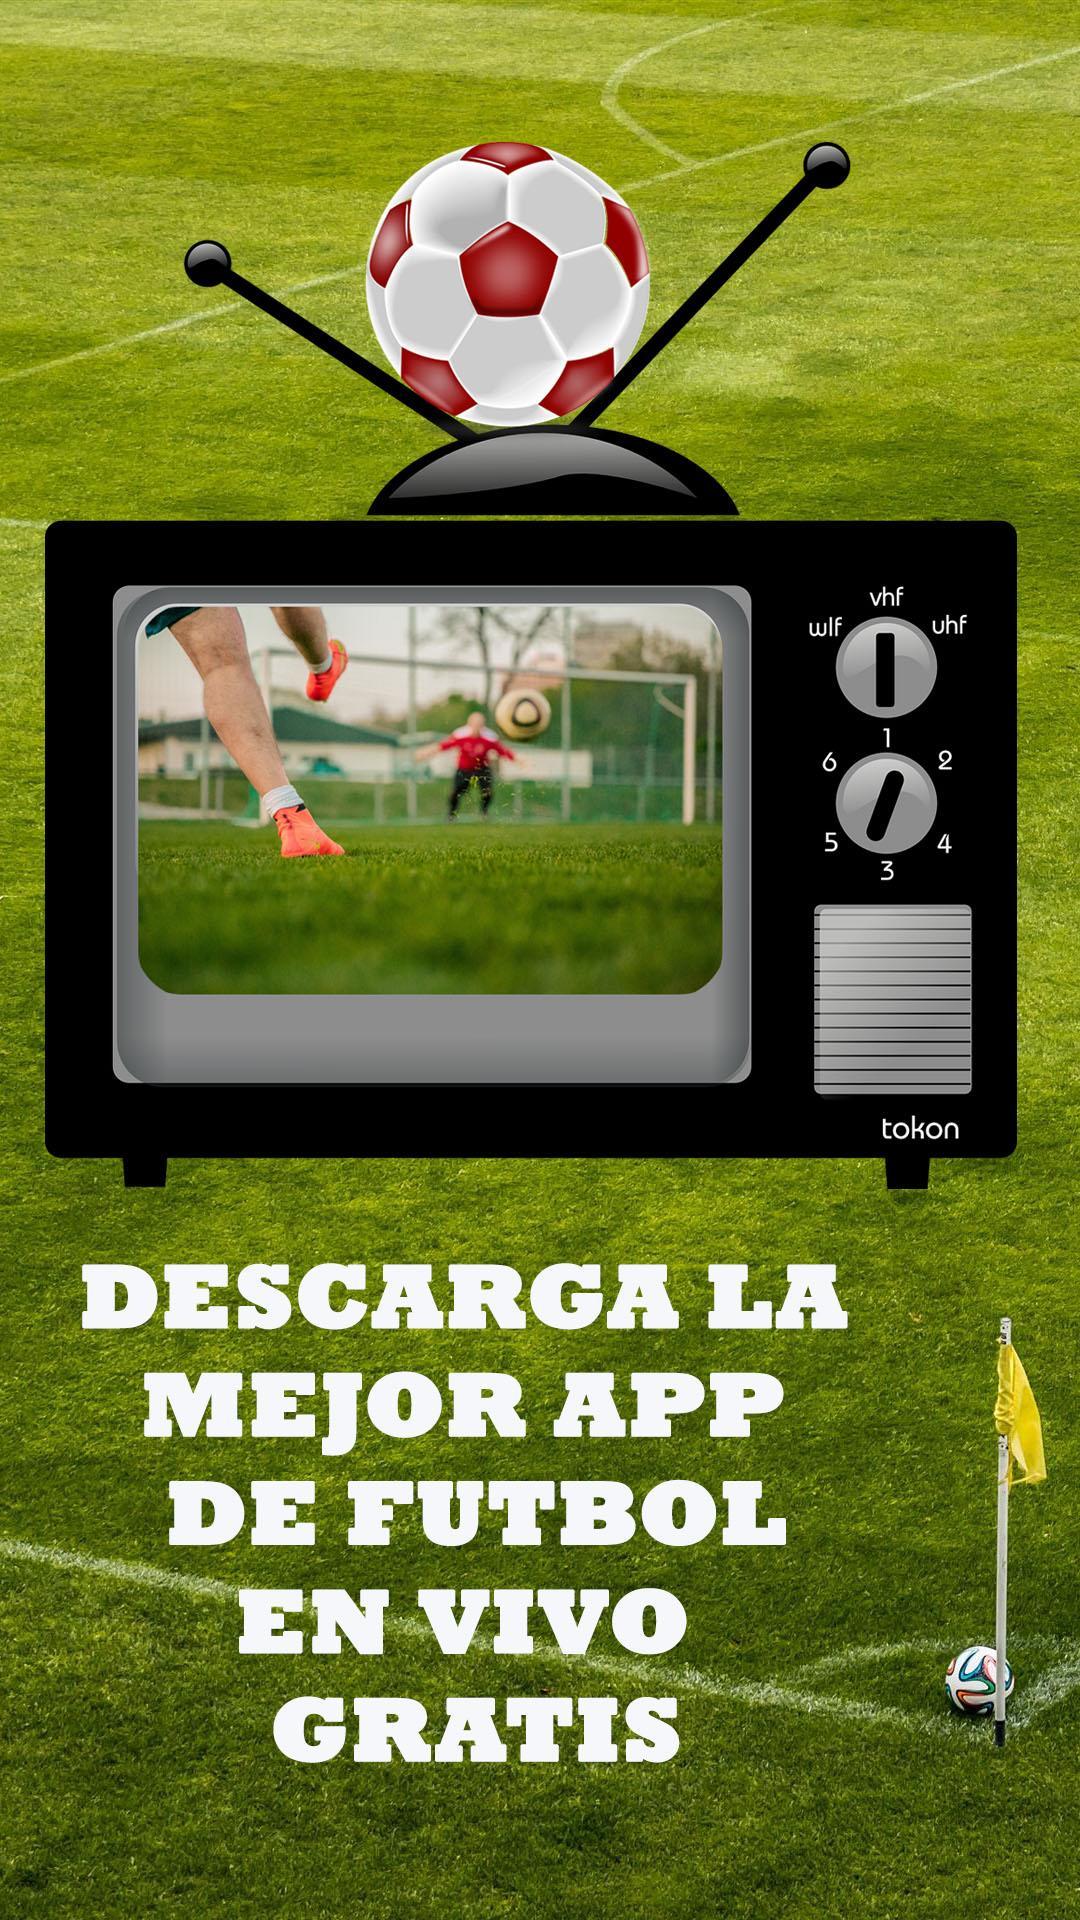 TV fútbol en VIVO Gratis - TV CABLE Guide for Android - APK Download